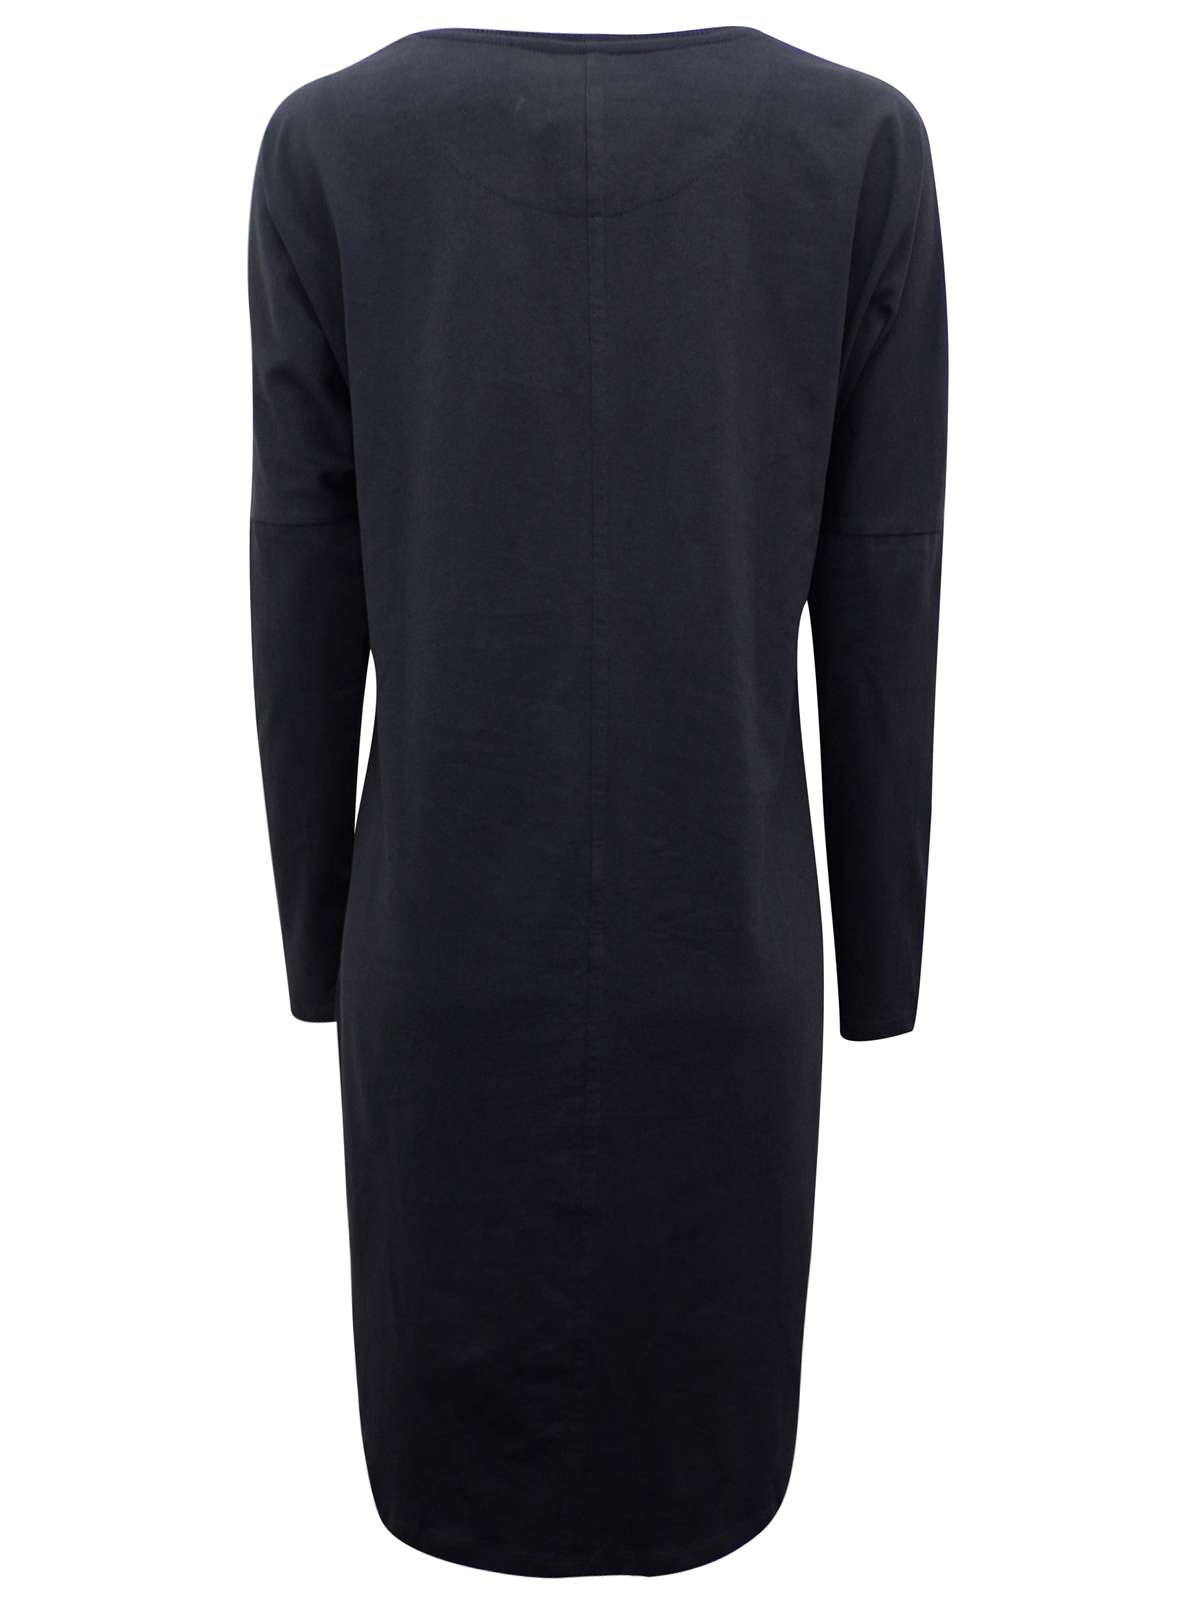 Cloth & Co - - Cloth&Co INK Organic Cotton Long Sleeve Dress - Size 10 ...